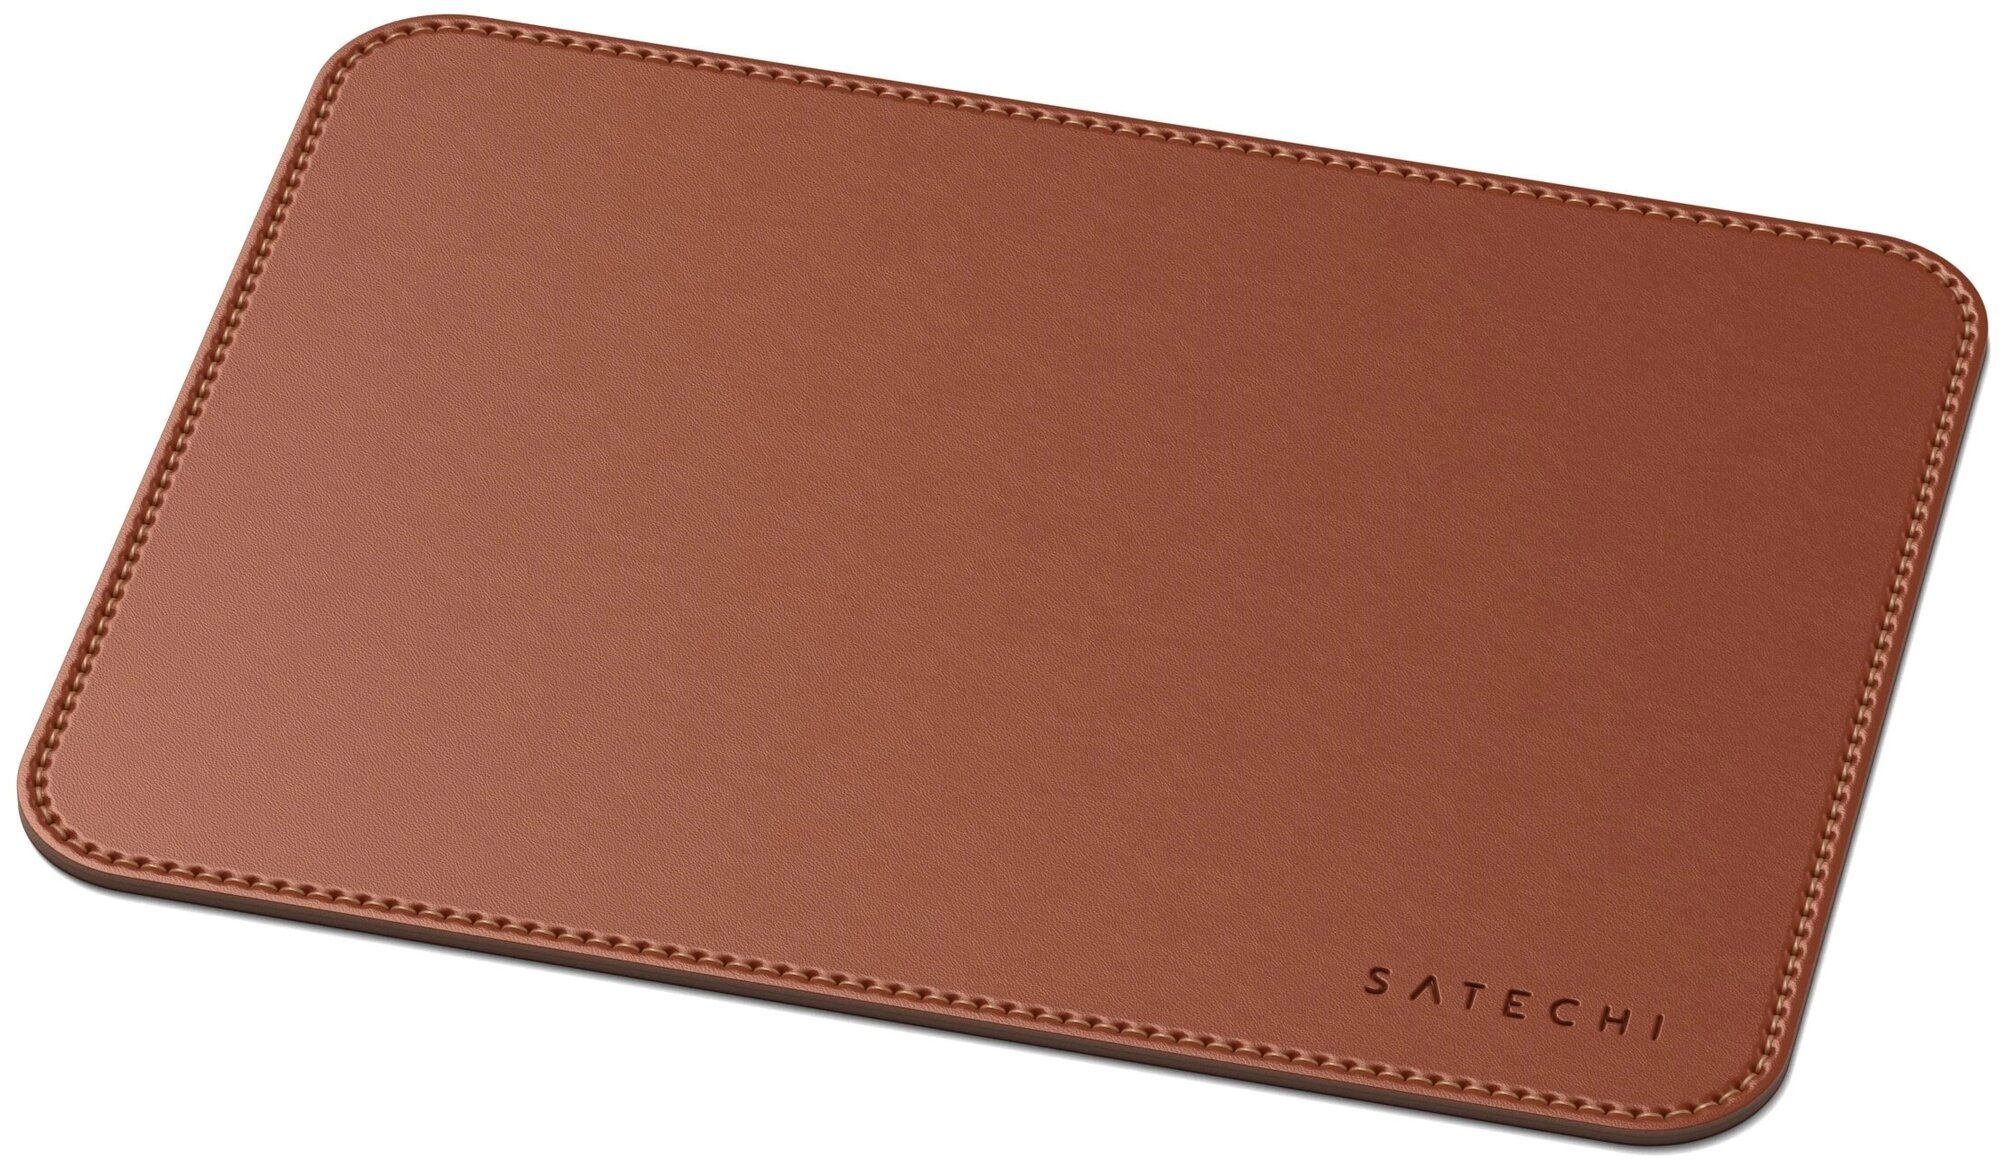 Коврик Satechi Eco Leather Mouse Pad Размер 25 x 19 см. коричневый. цена и фото